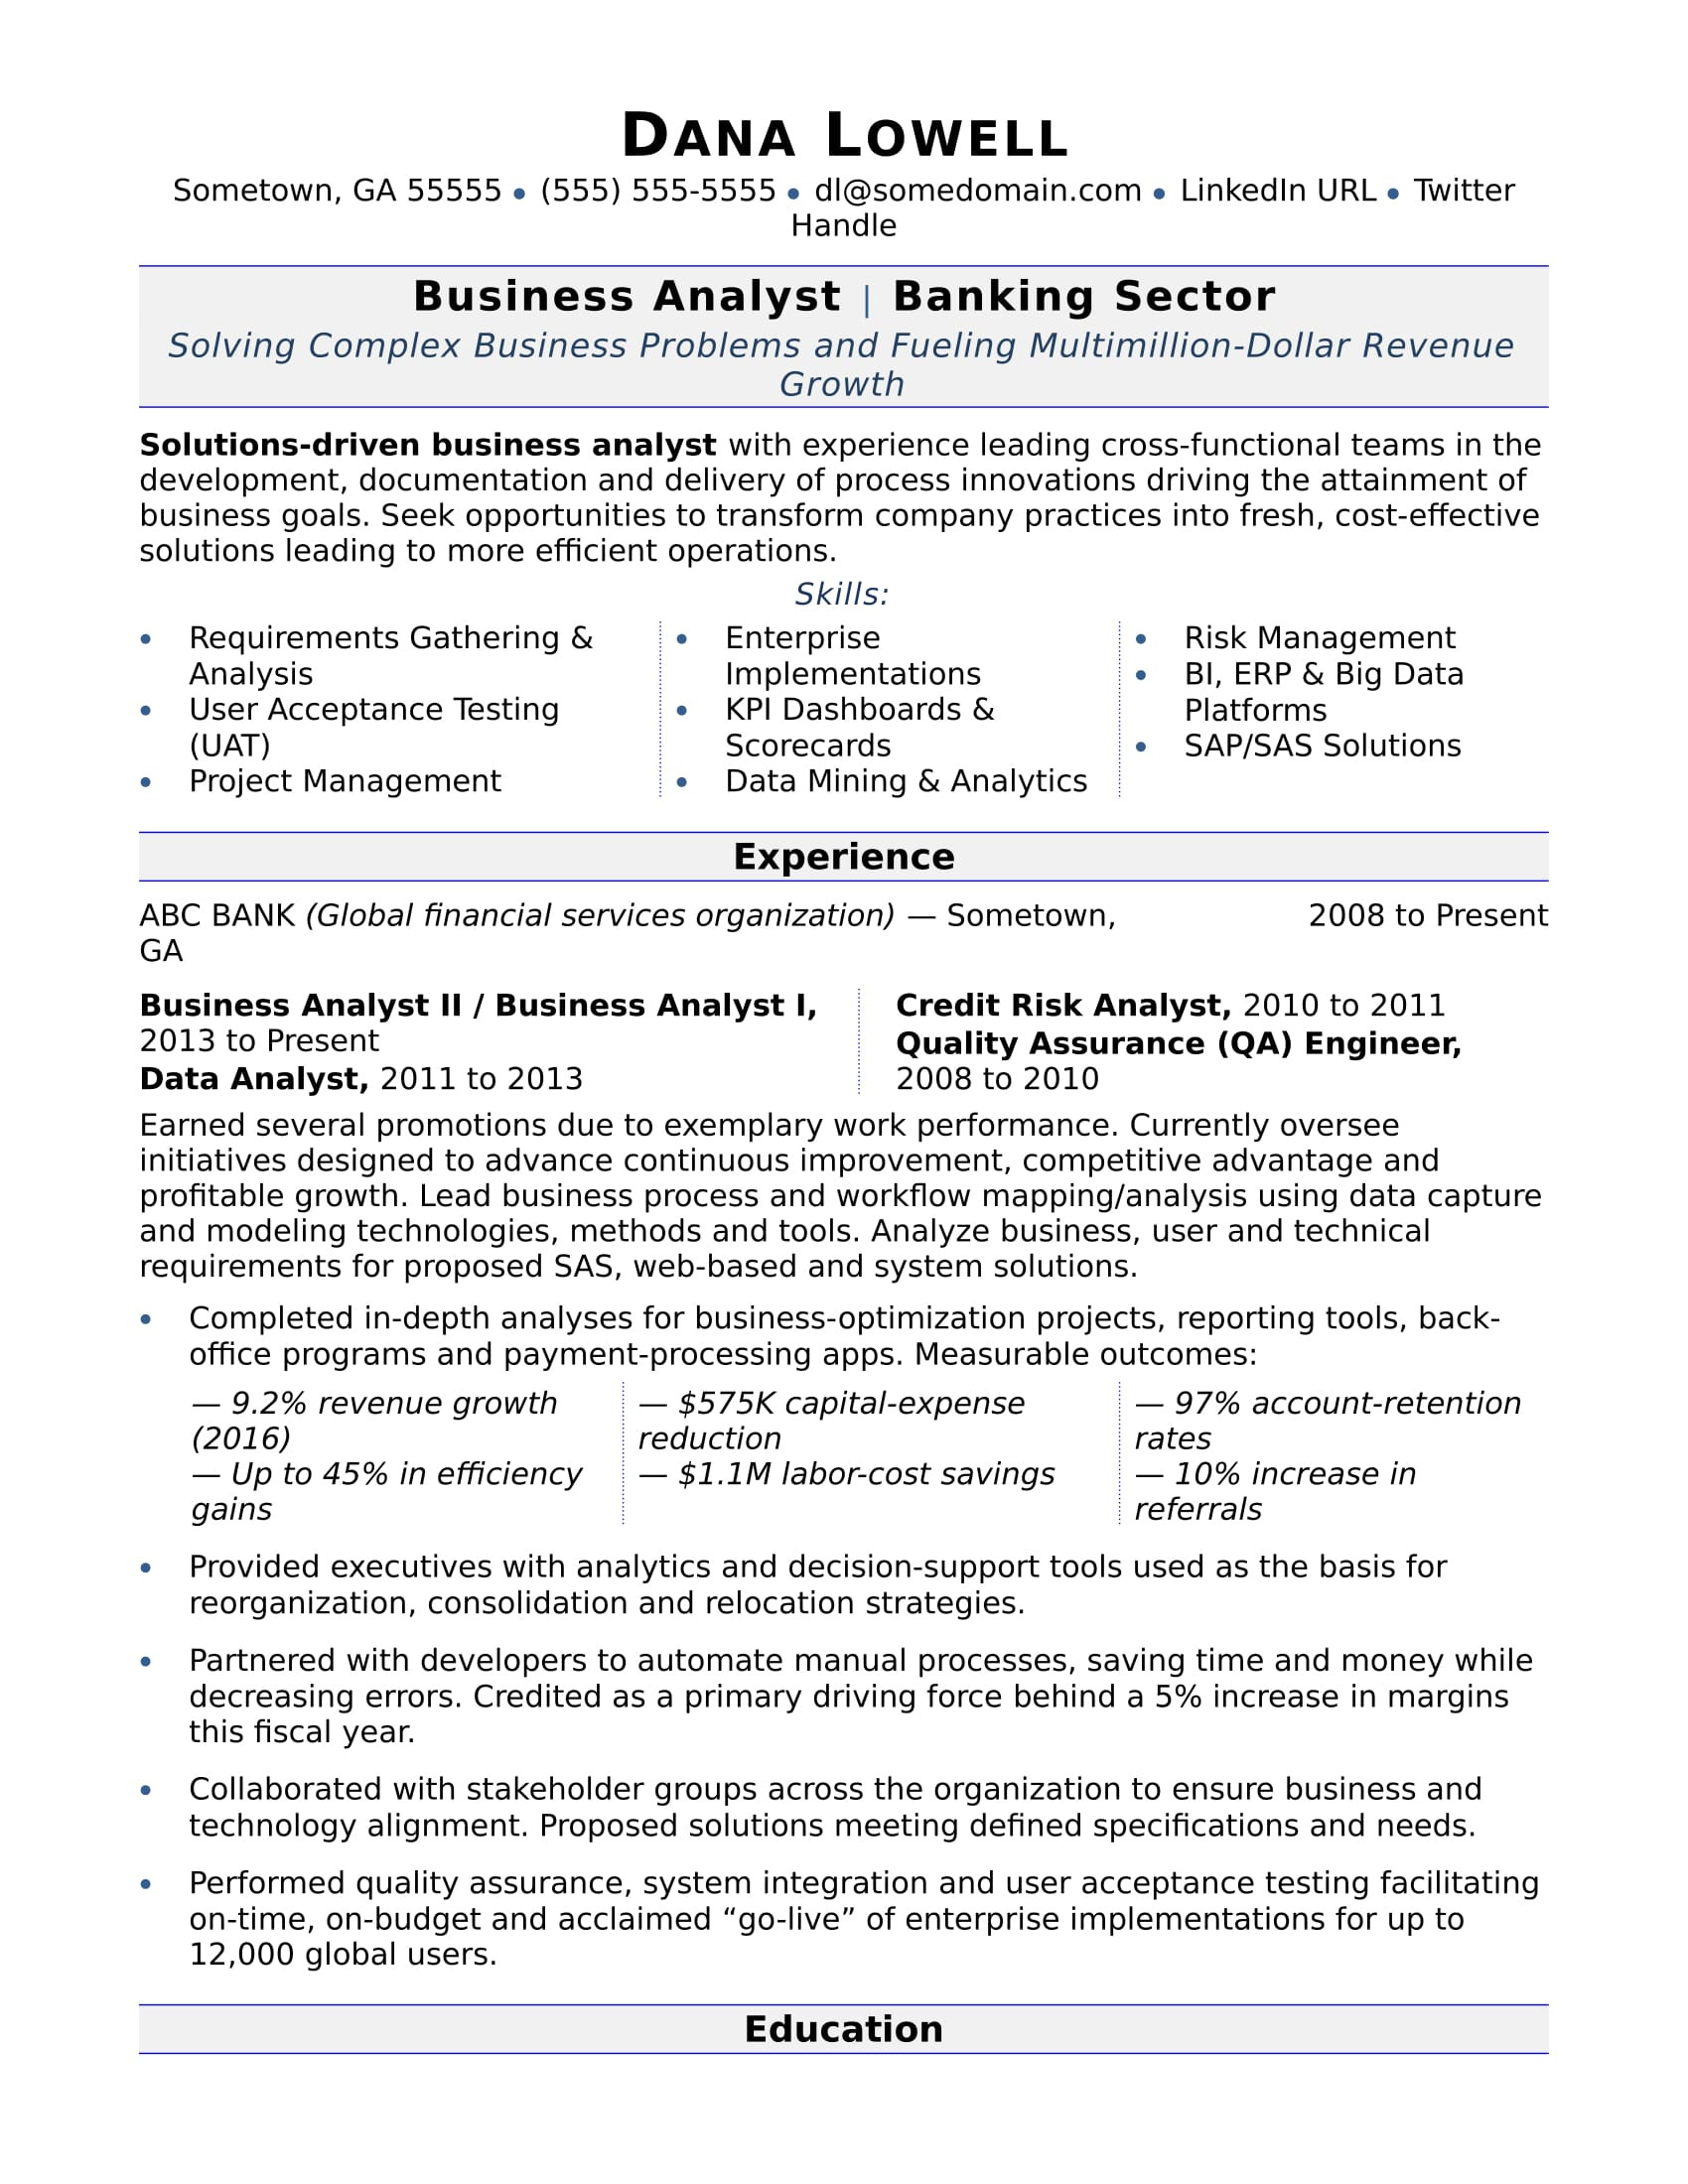 Business Analyst Sample Resume for Freshers Business Analyst Resume Monster.com